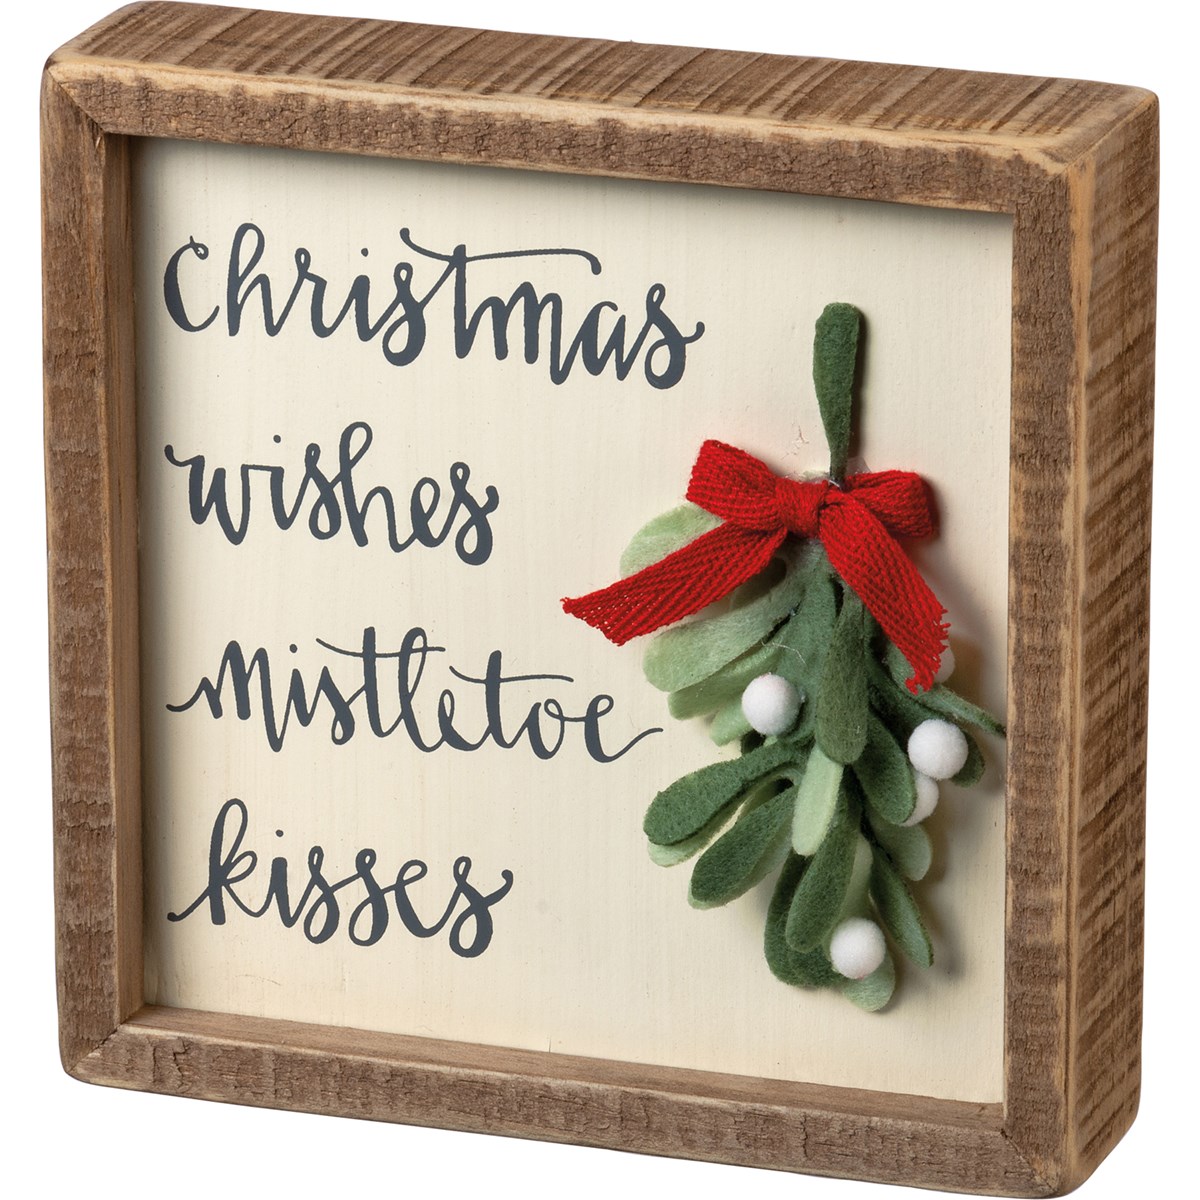 Christmas Wishes Mistletoe Kisses Inset Box Sign - Wood, Felt, Ribbon